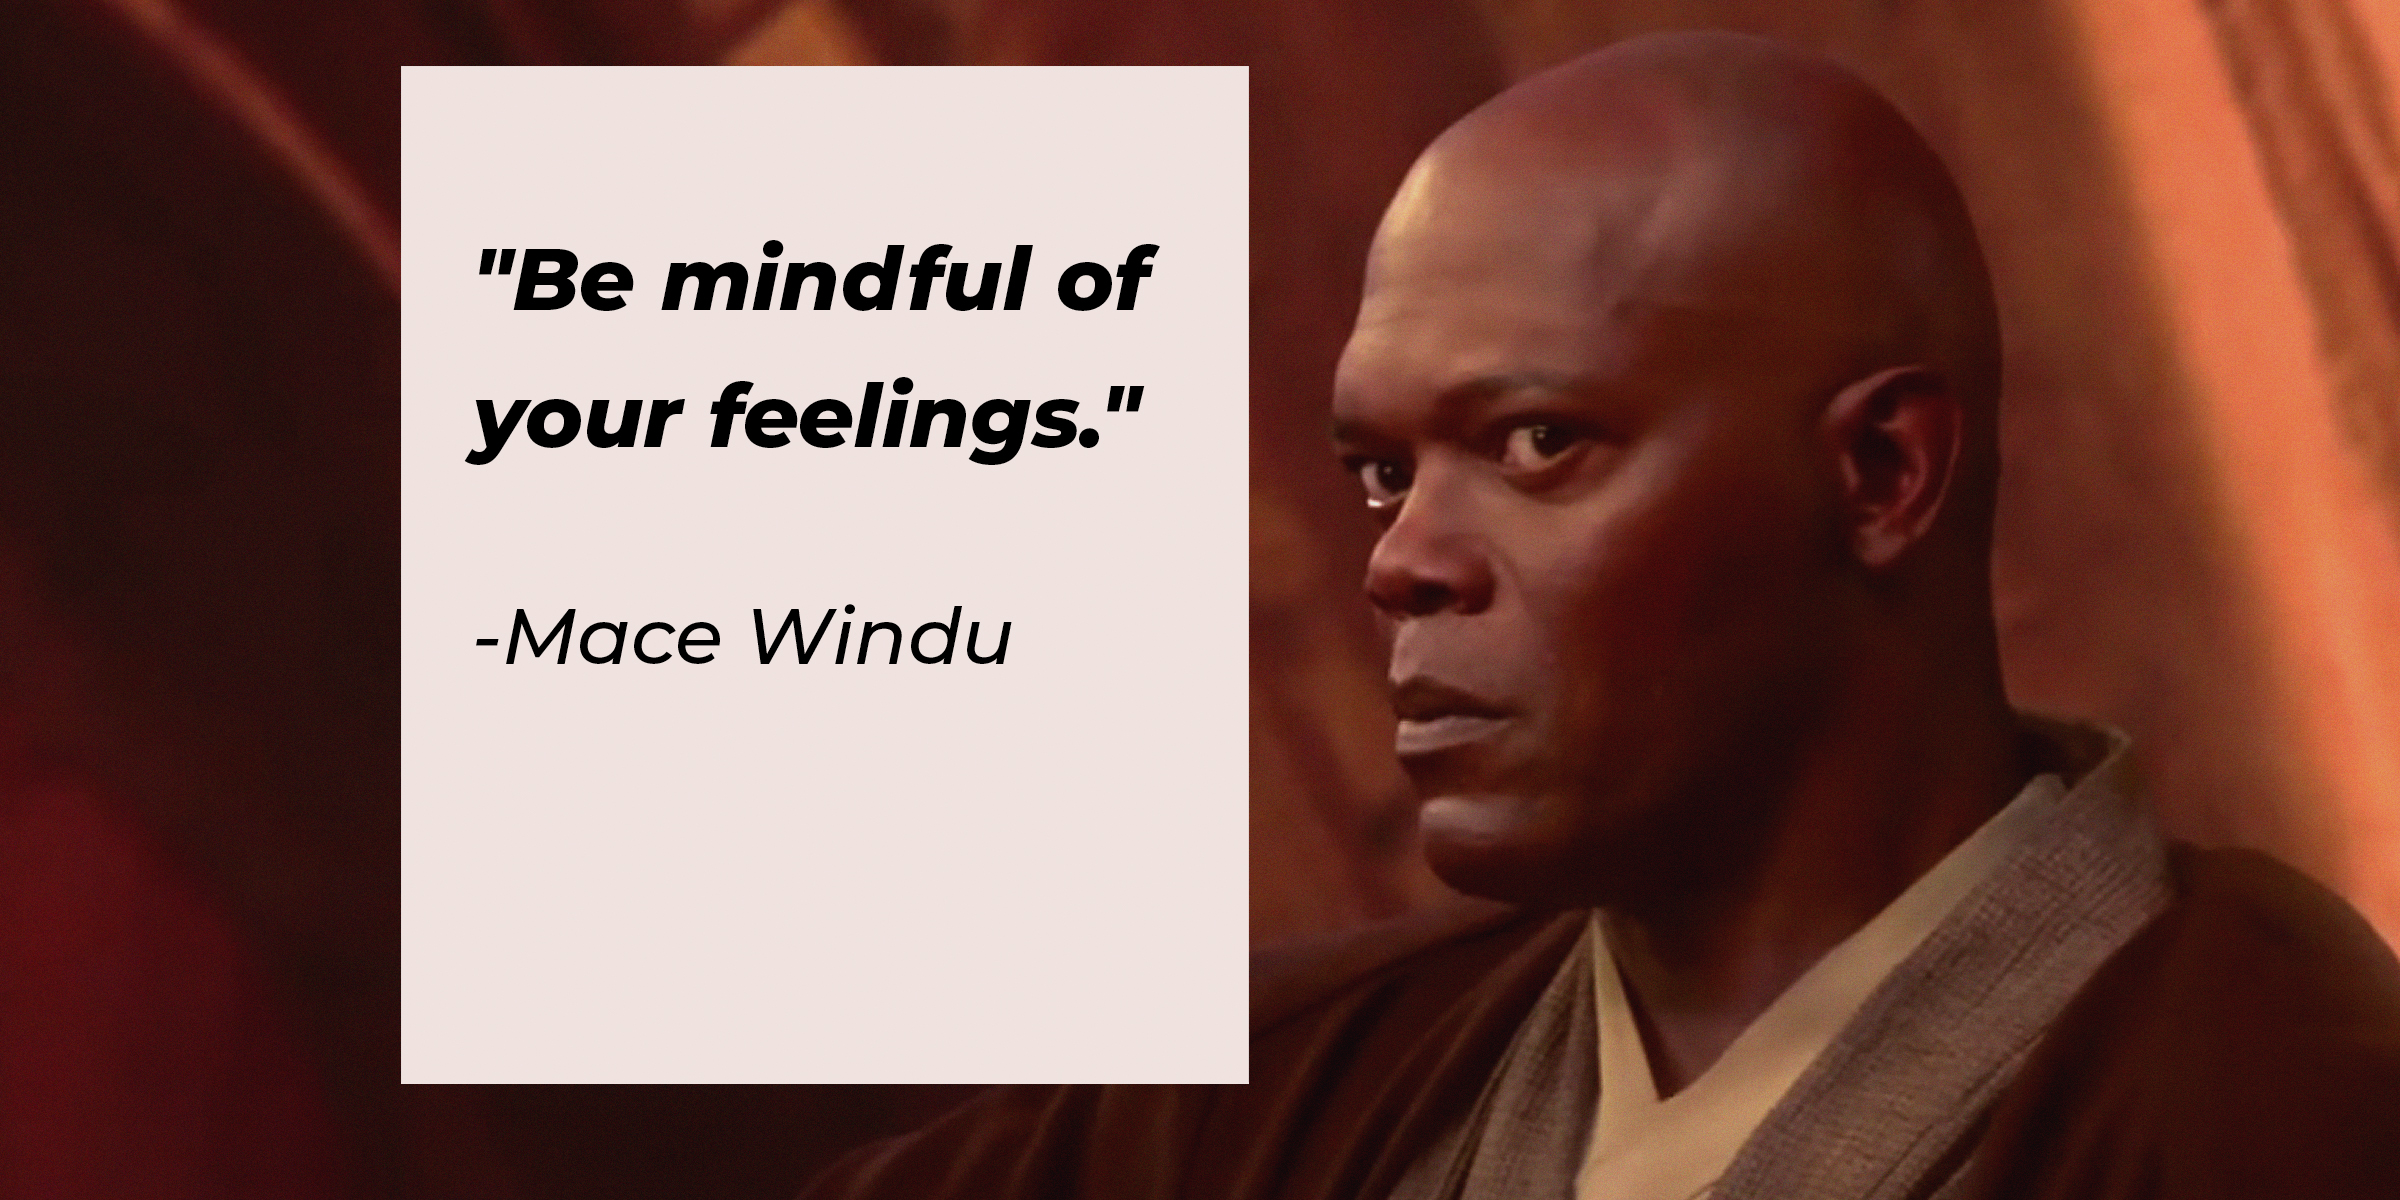 Mace Windu's quote: "Be mindful of your feelings." | Image: Facebook / StarWars.UK